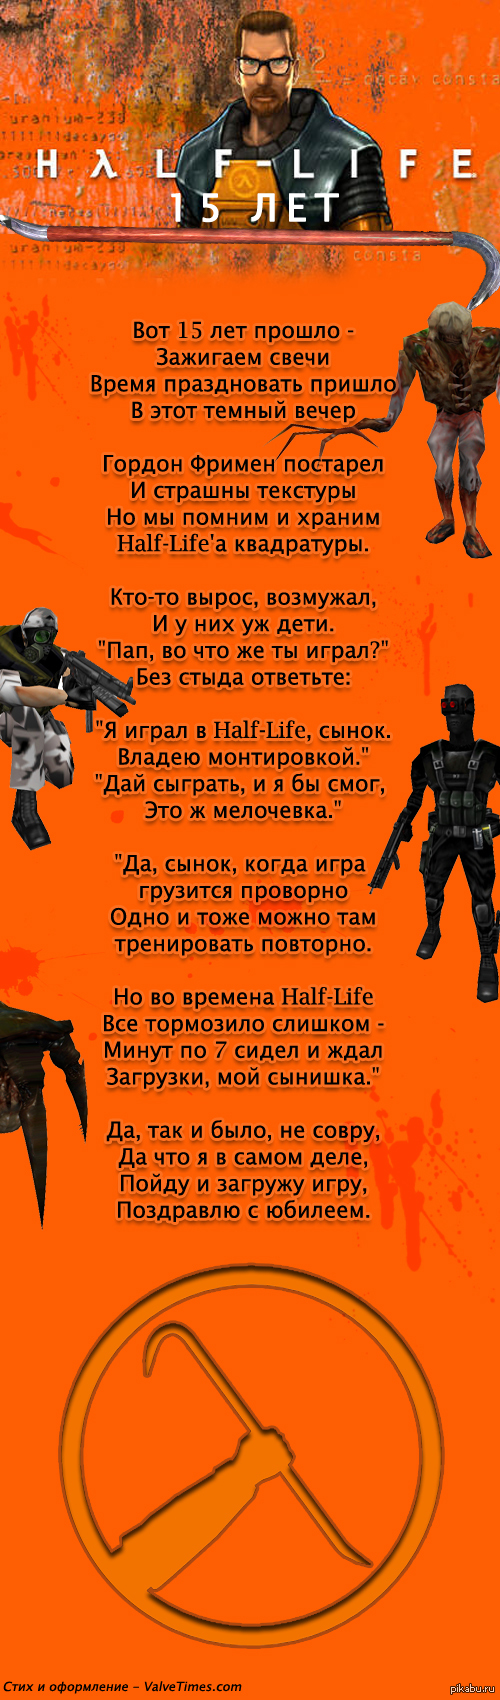 Half-Life 1   15 ...      ,   ,      .    ,     .